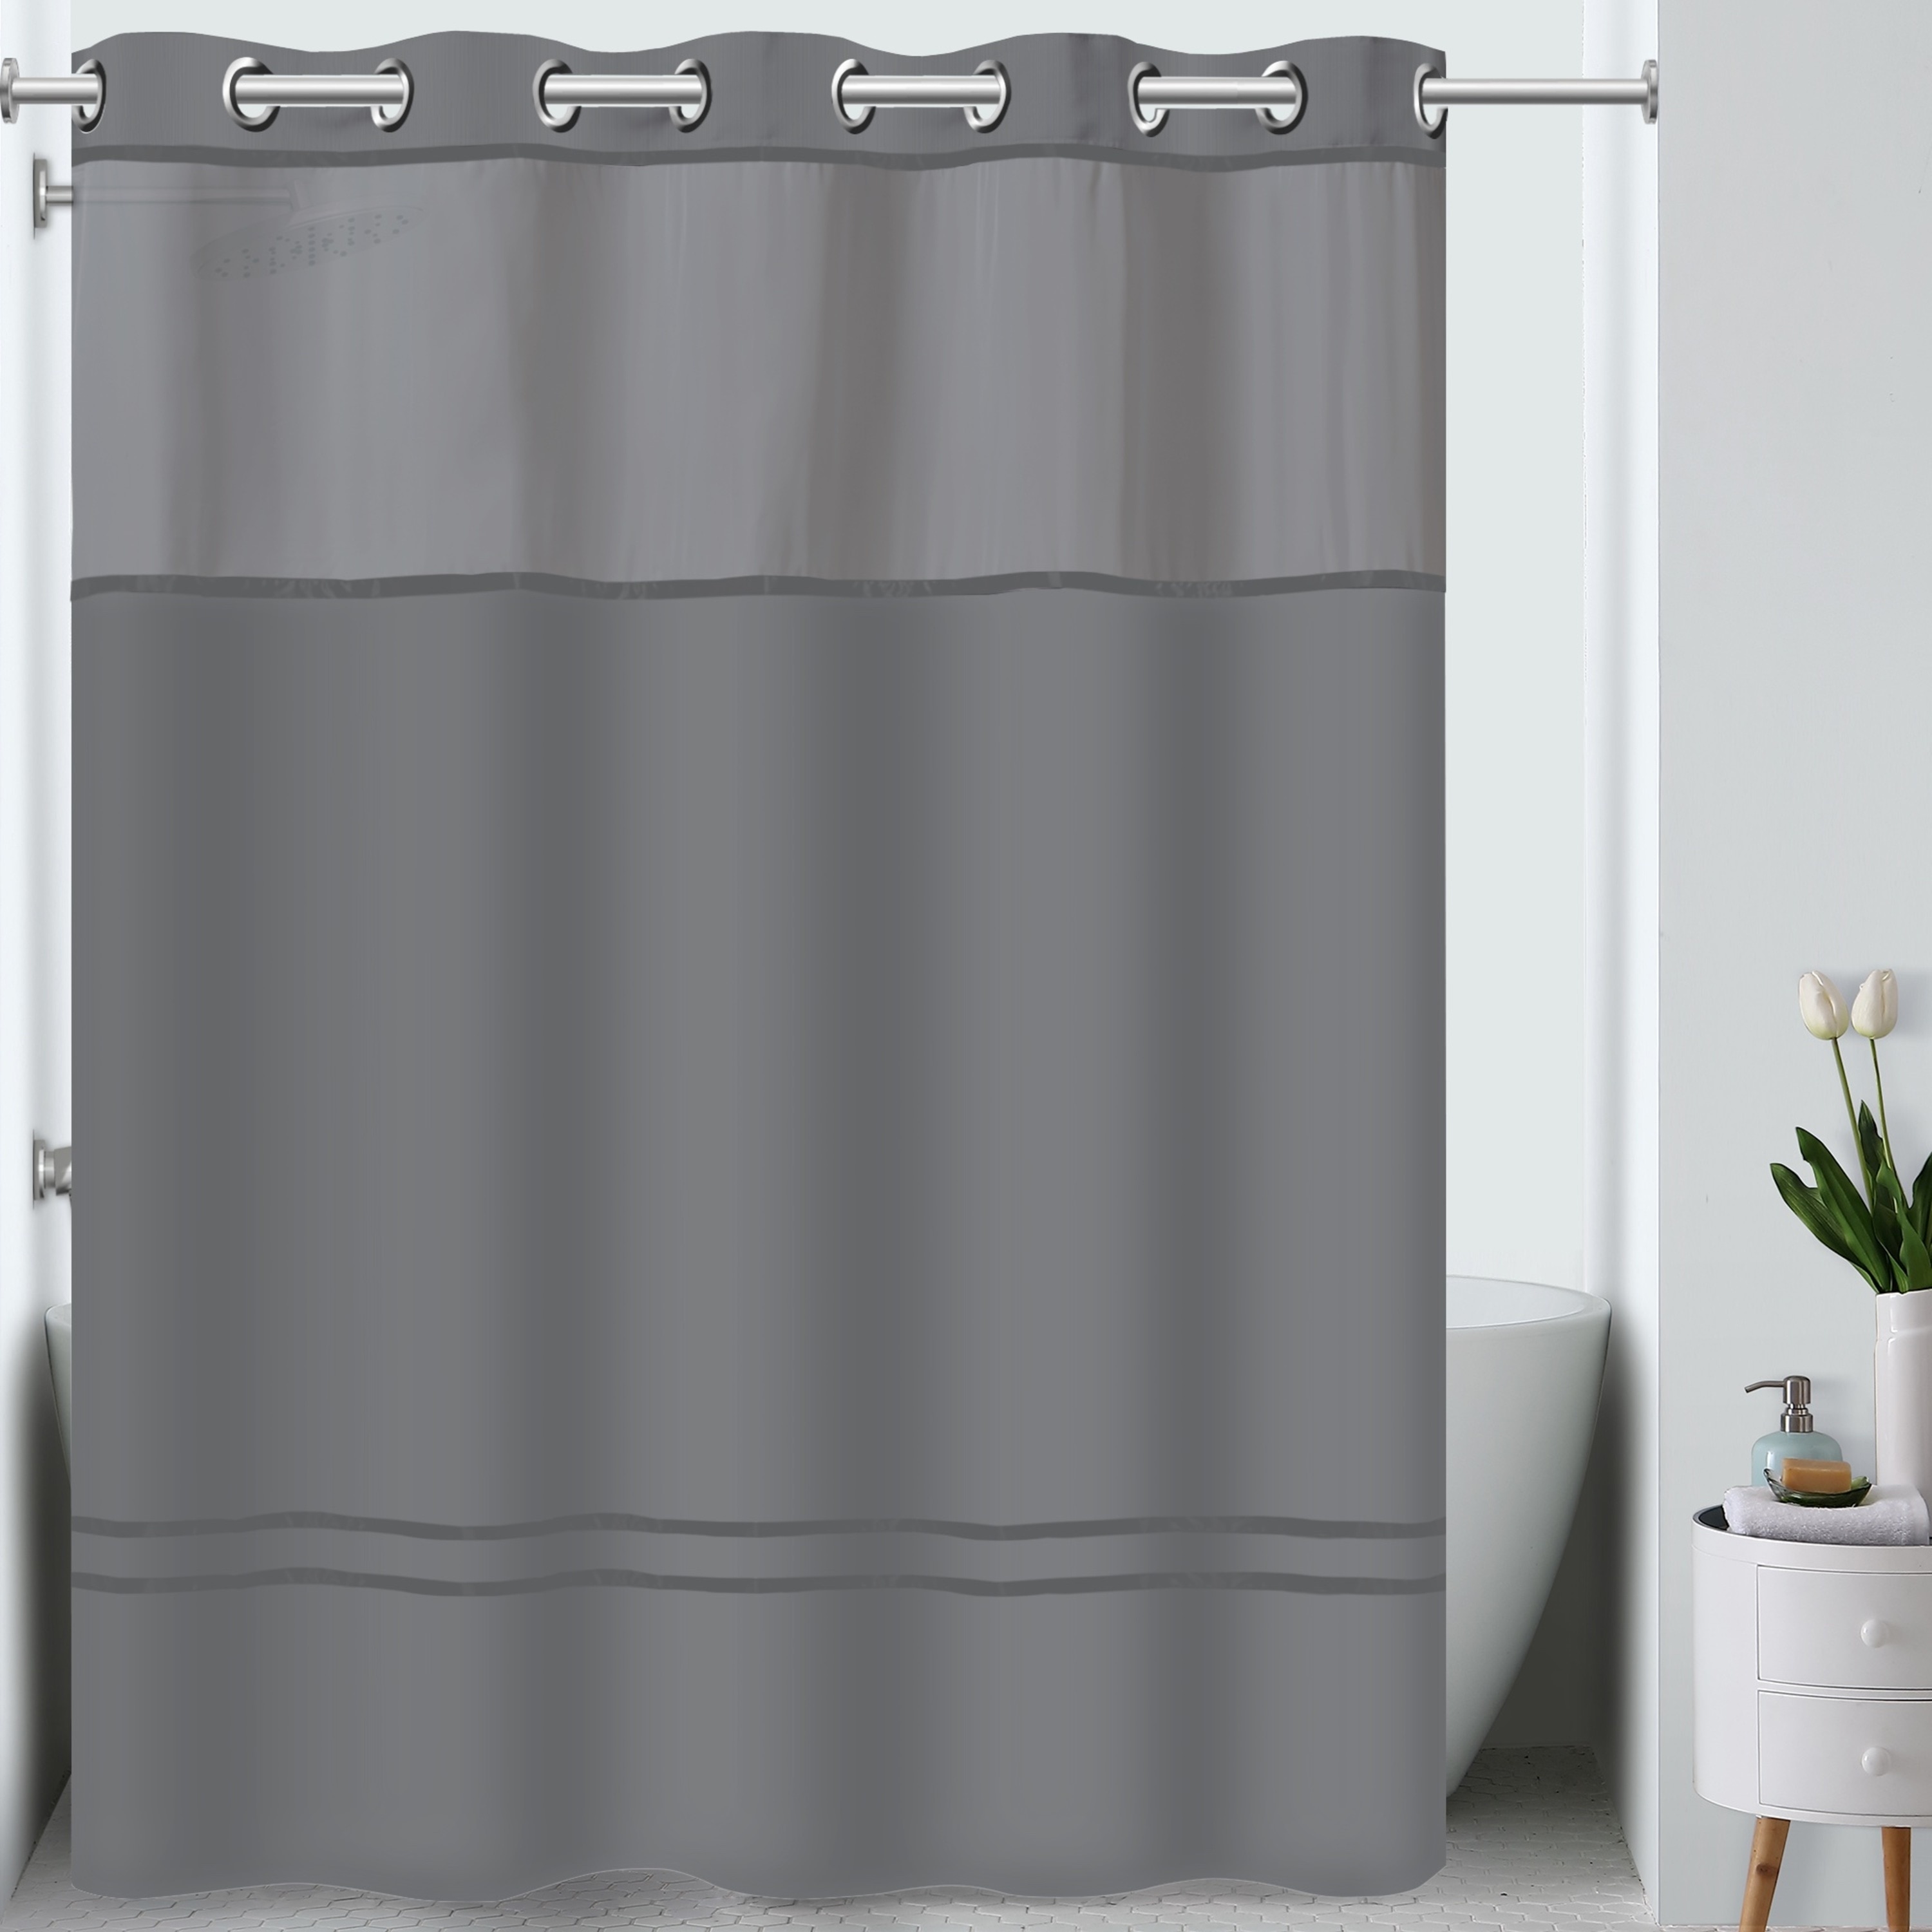 Hookless Fish Print Peva Shower Curtain - Bed Bath & Beyond - 31772303